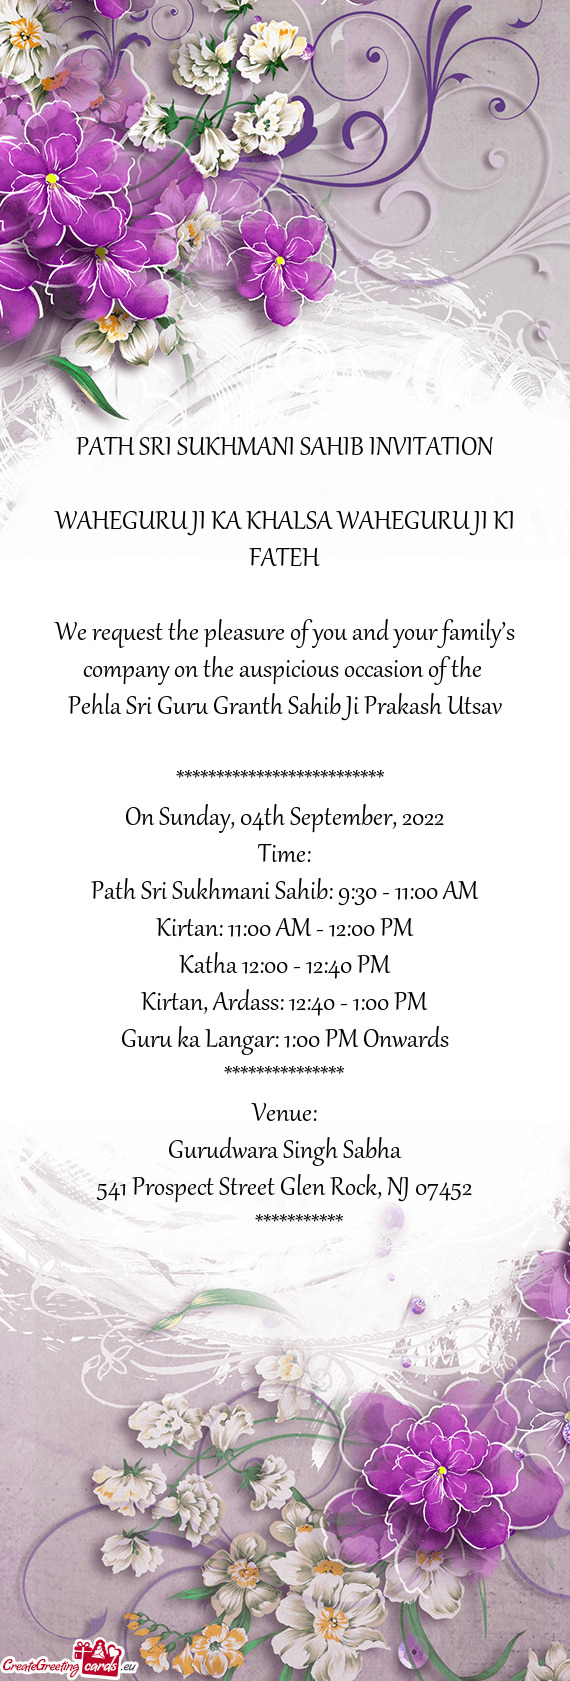 PATH SRI SUKHMANI SAHIB INVITATION